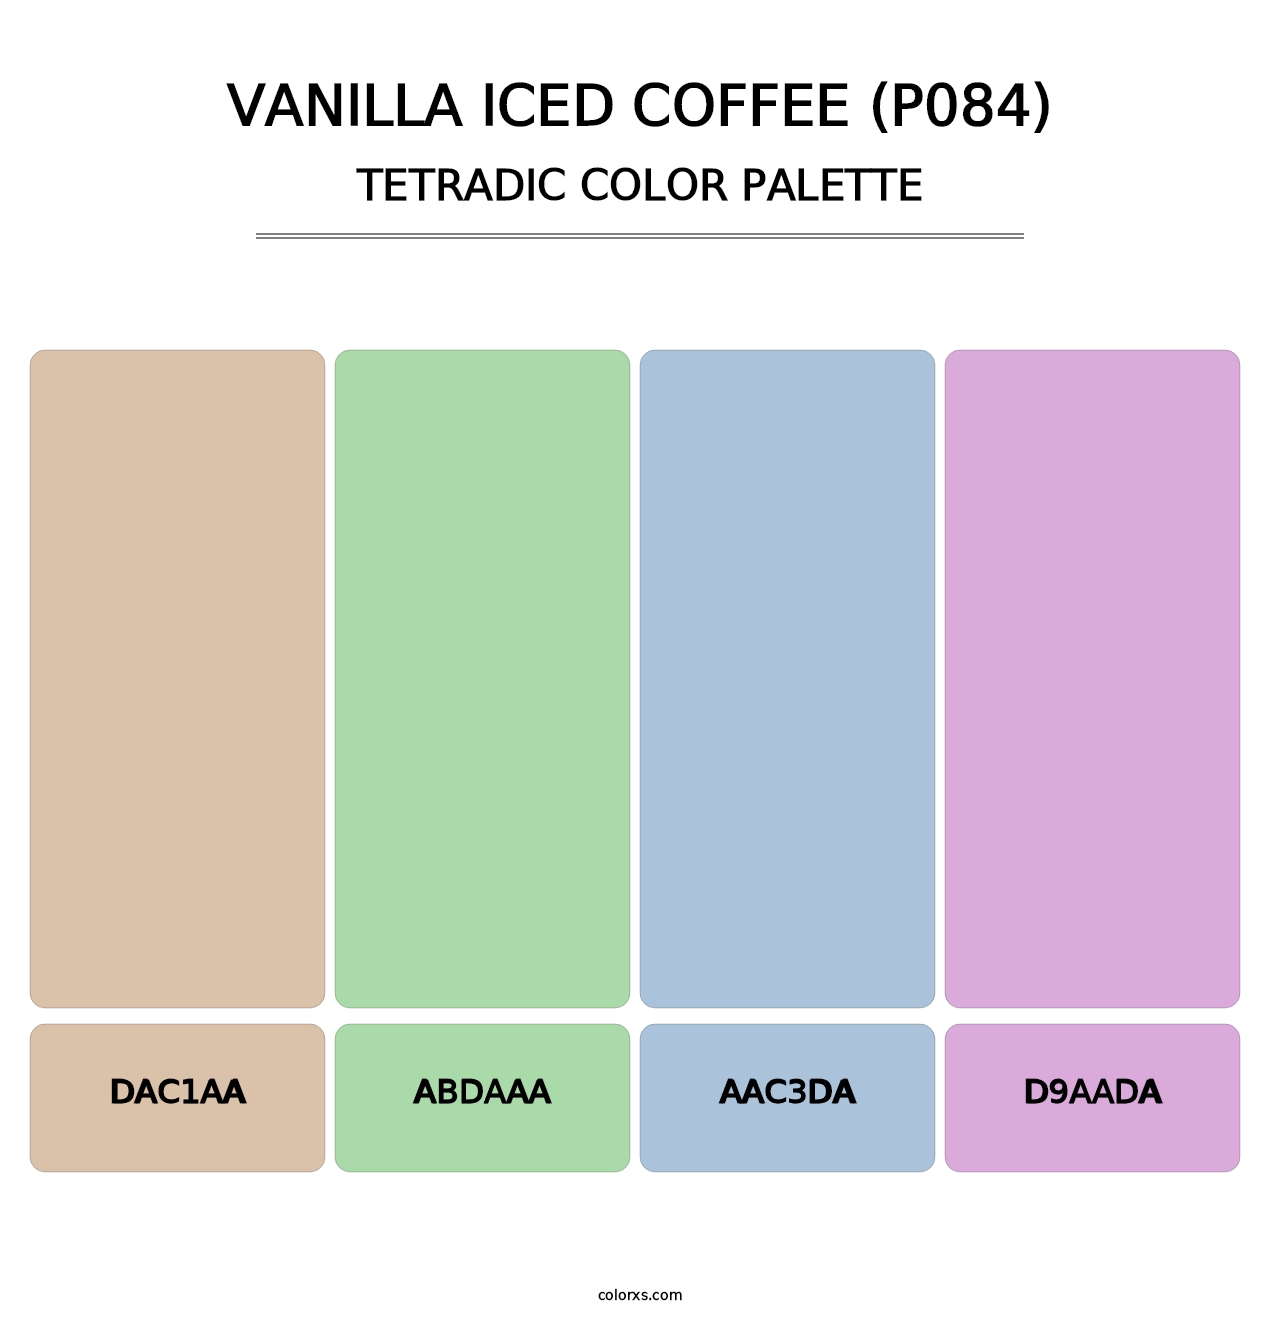 Vanilla Iced Coffee (P084) - Tetradic Color Palette